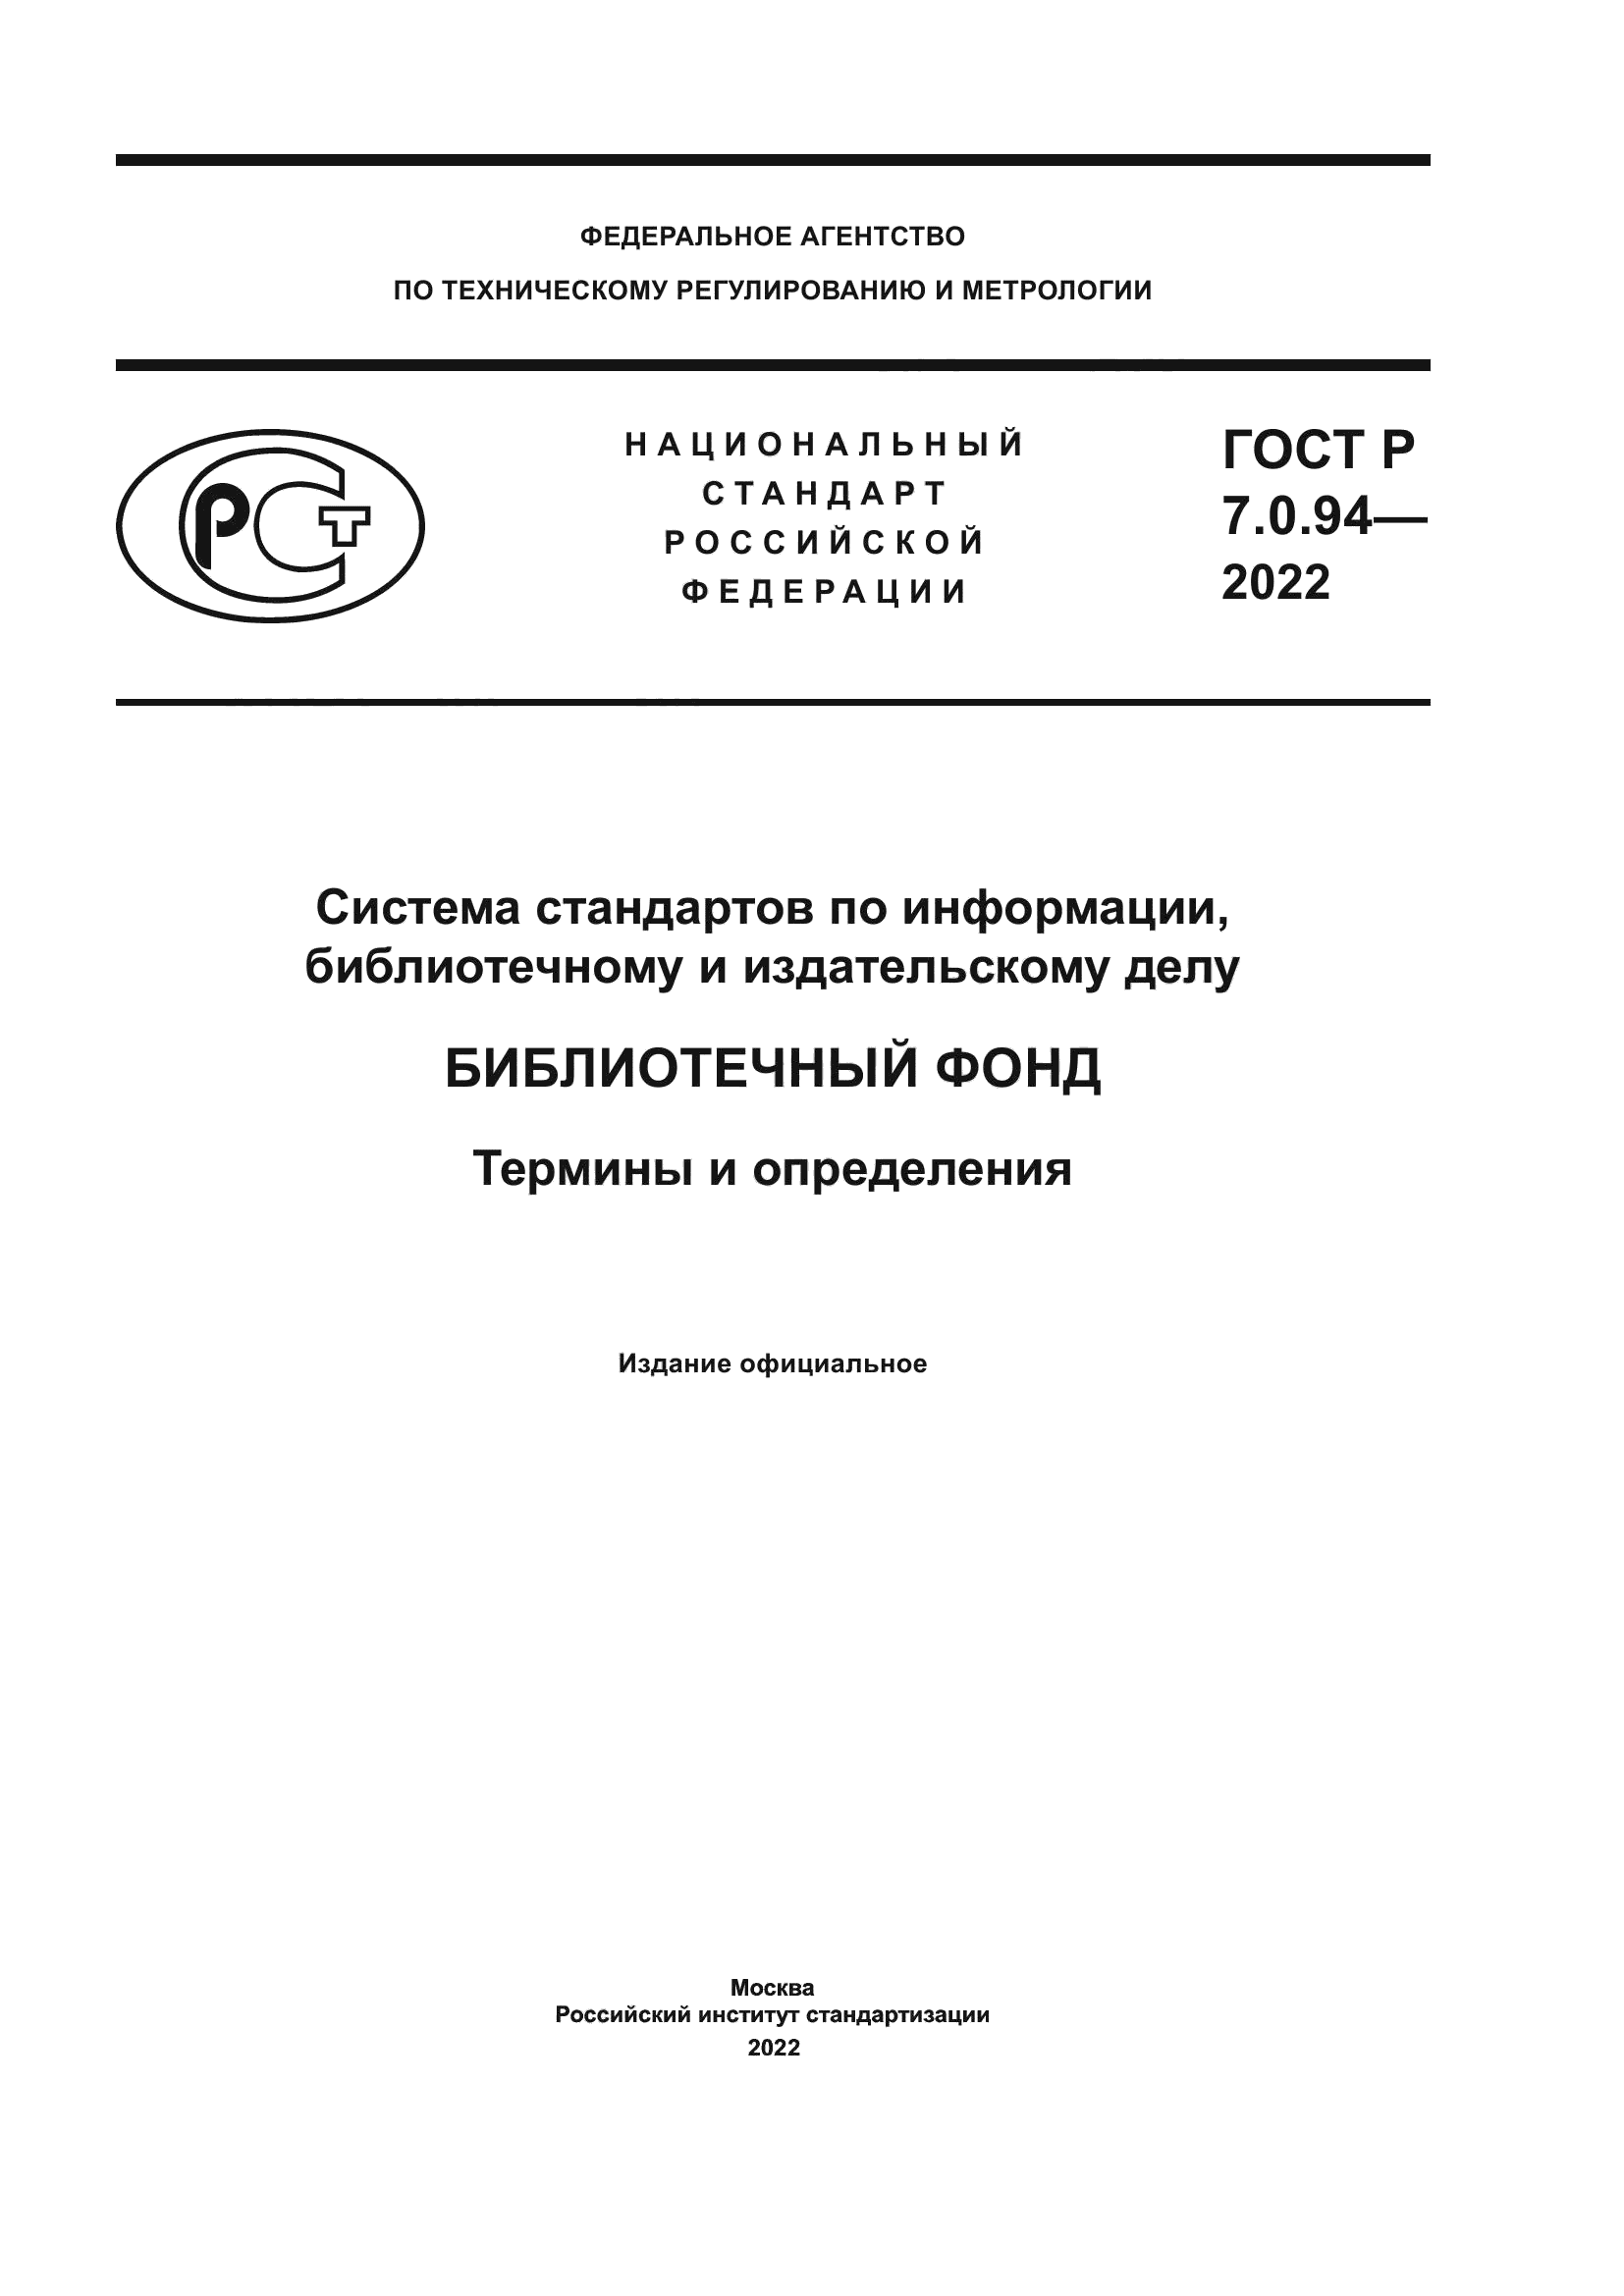 ГОСТ Р 7.0.94-2022